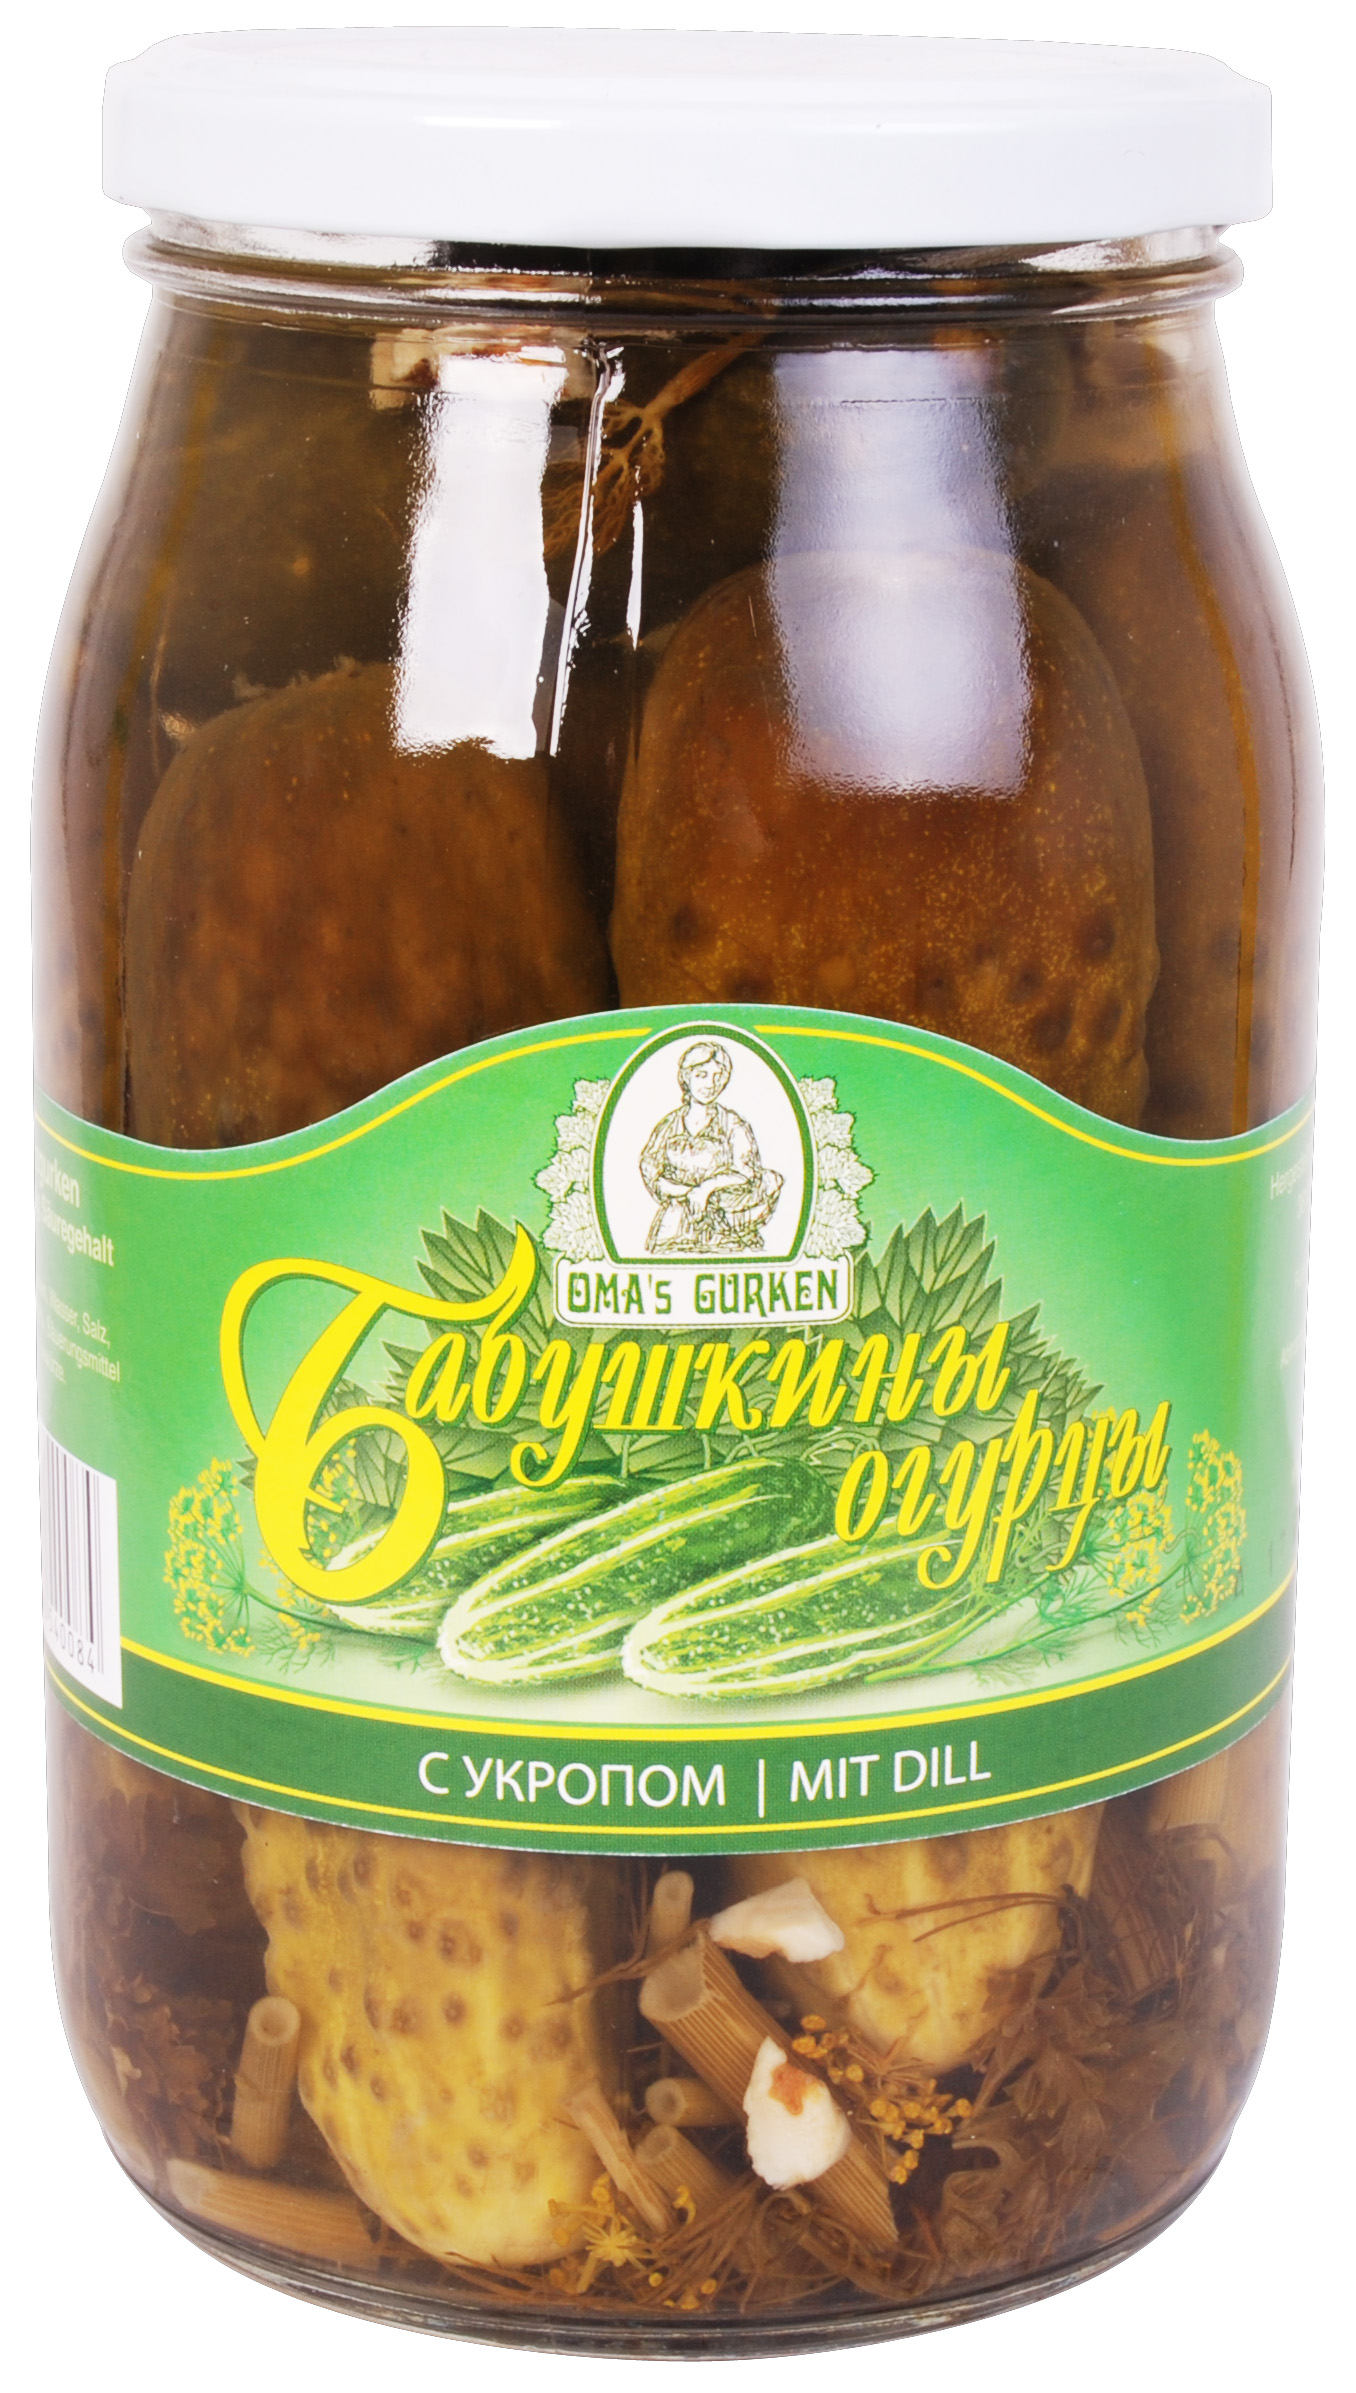 Omas Gurken Cucumbers "Babushkiny" with dill 900ml